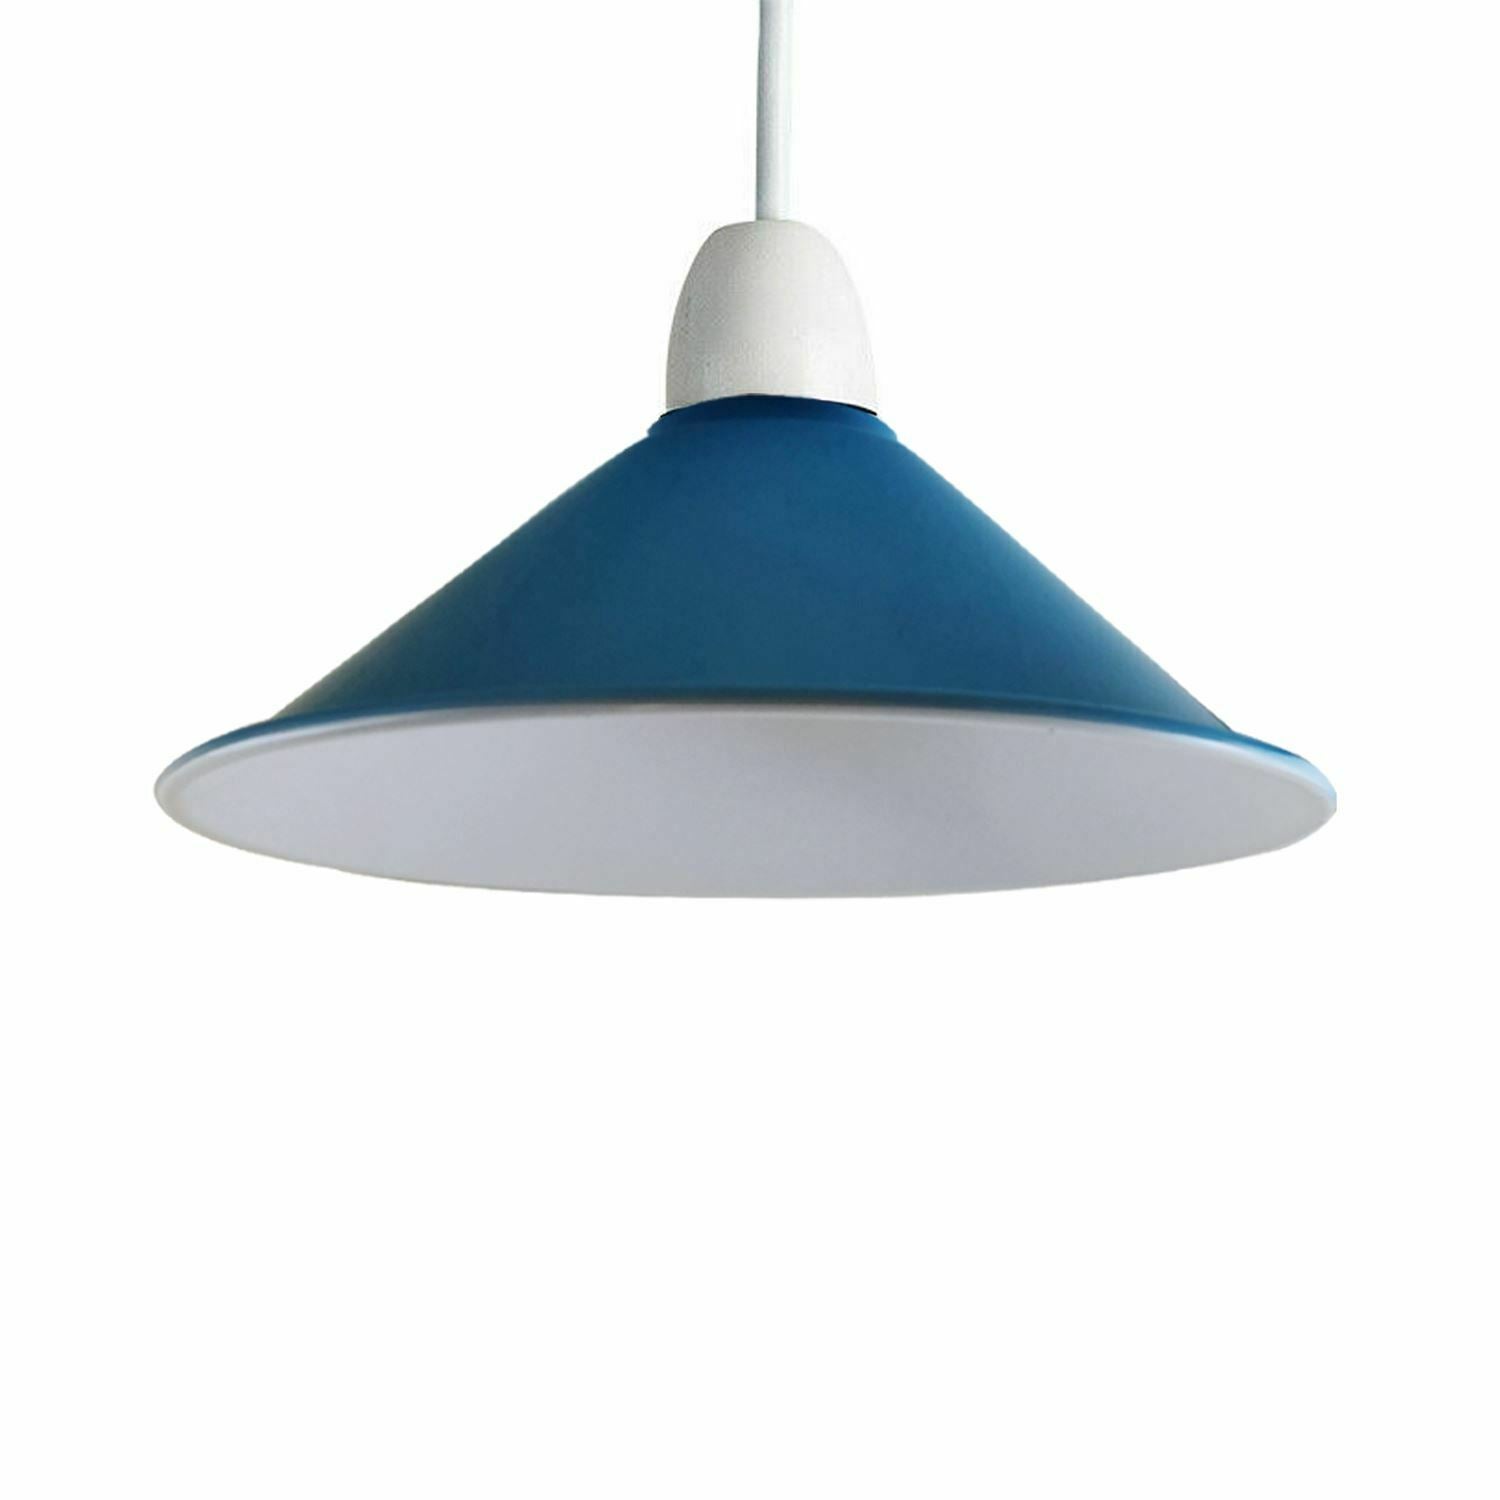 Blue Cone Pendant Lamp Shade.JPG